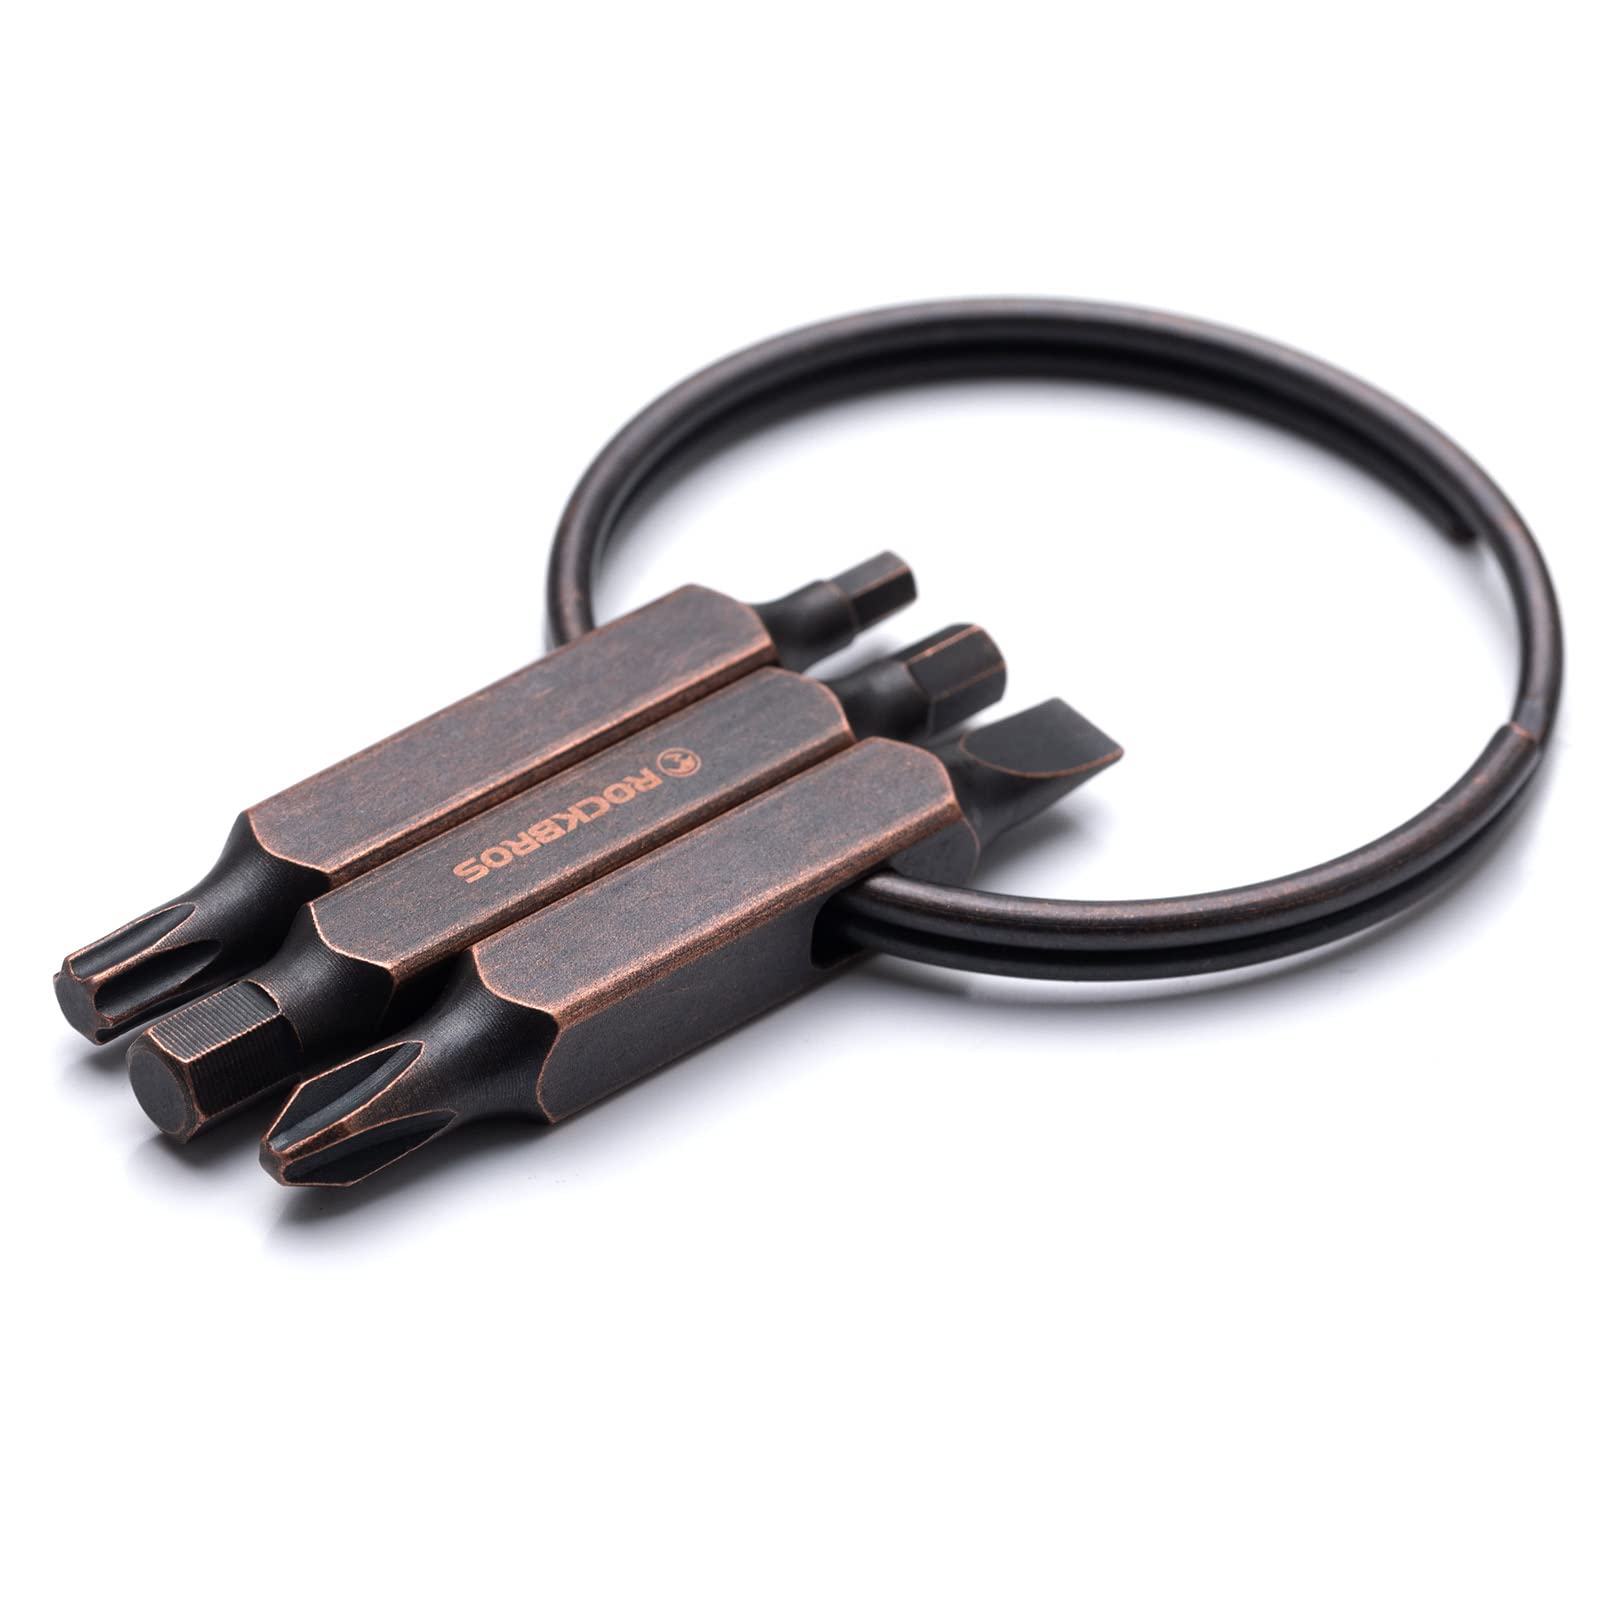 ROCKBROS Road-to-Sky Mini Bike Repair Tool 6 in 1 Portable Keychain